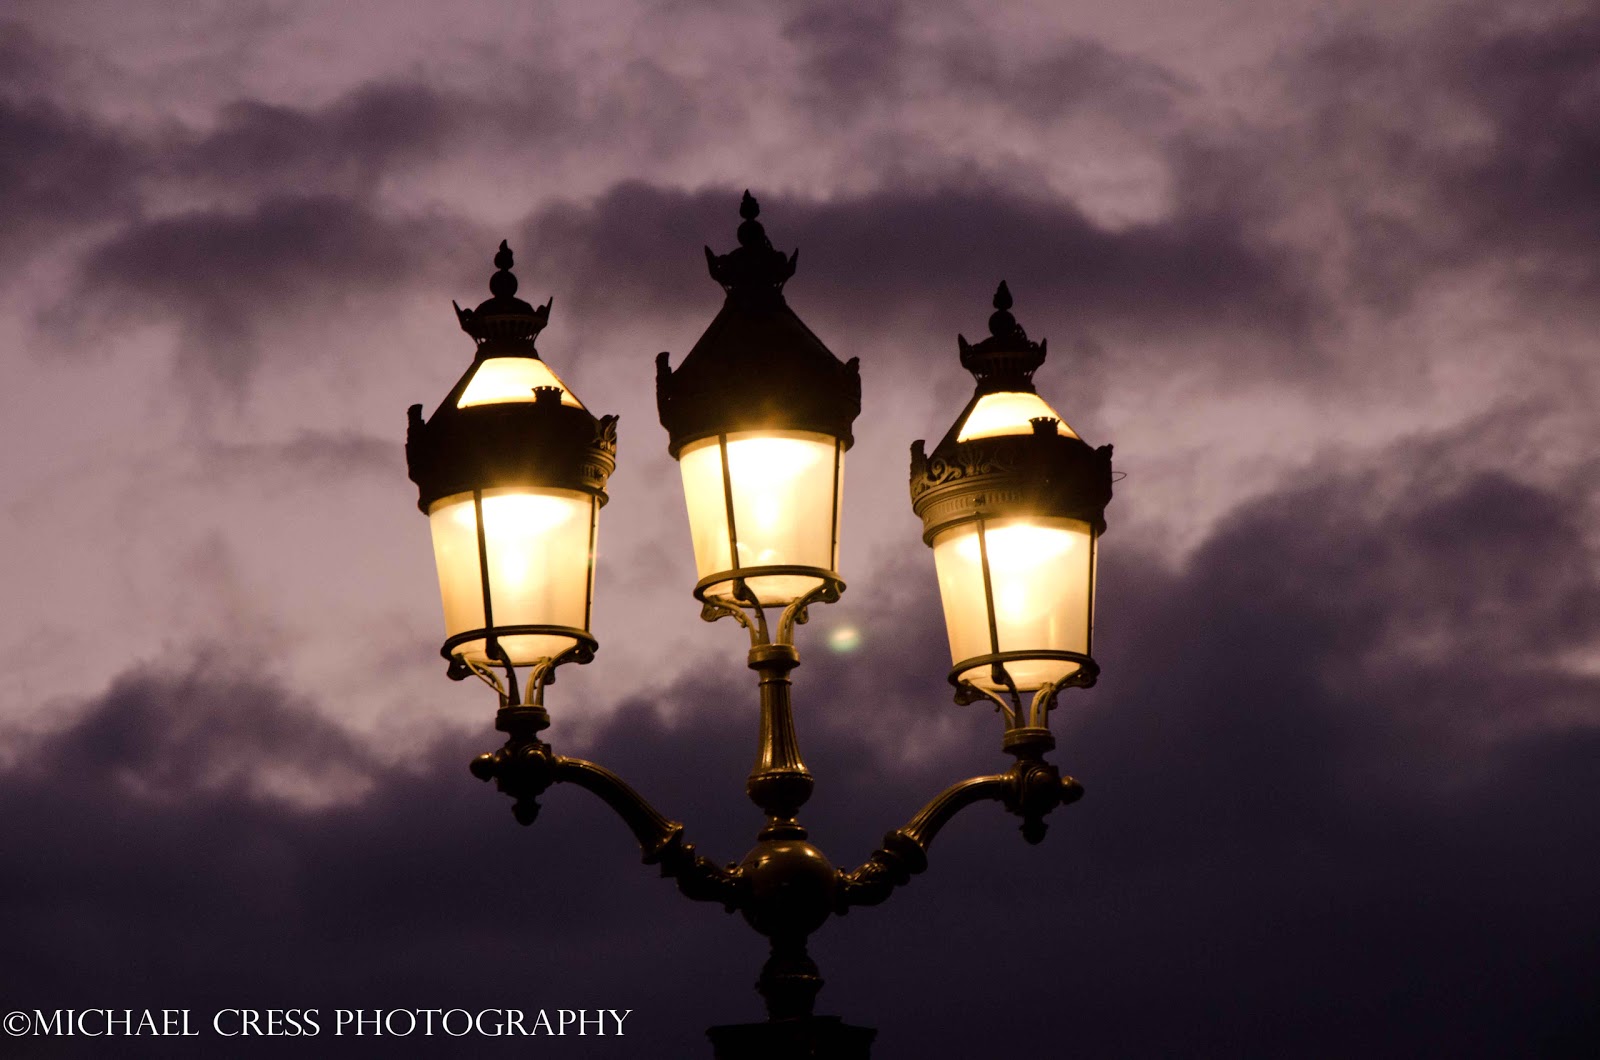 Michael Cress: Lights of Paris